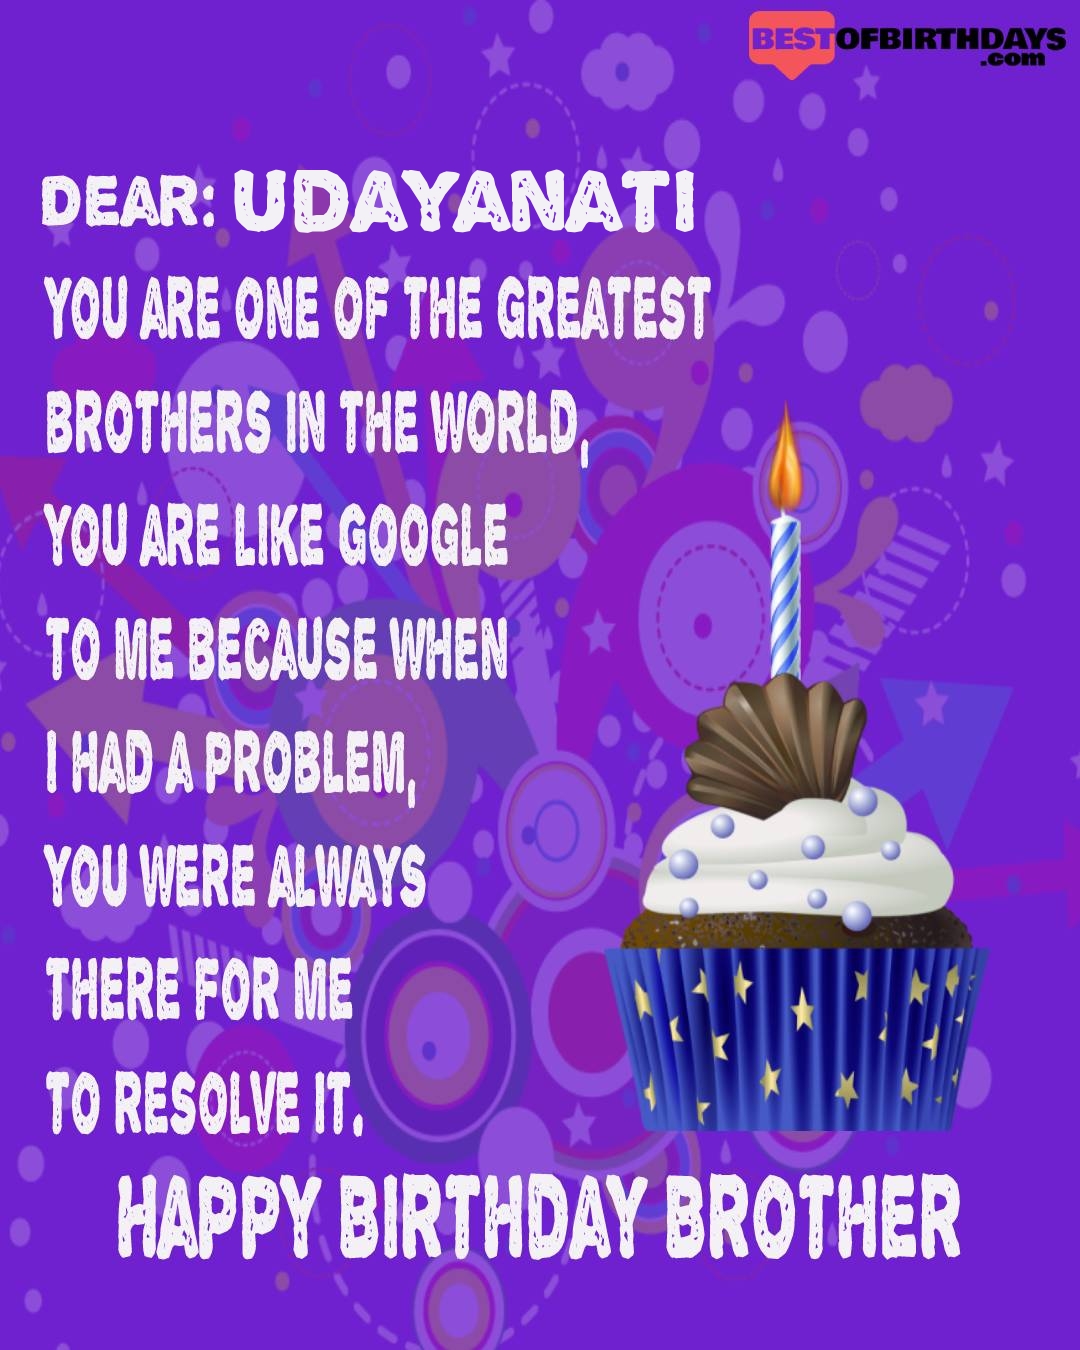 Happy birthday udayanati bhai brother bro